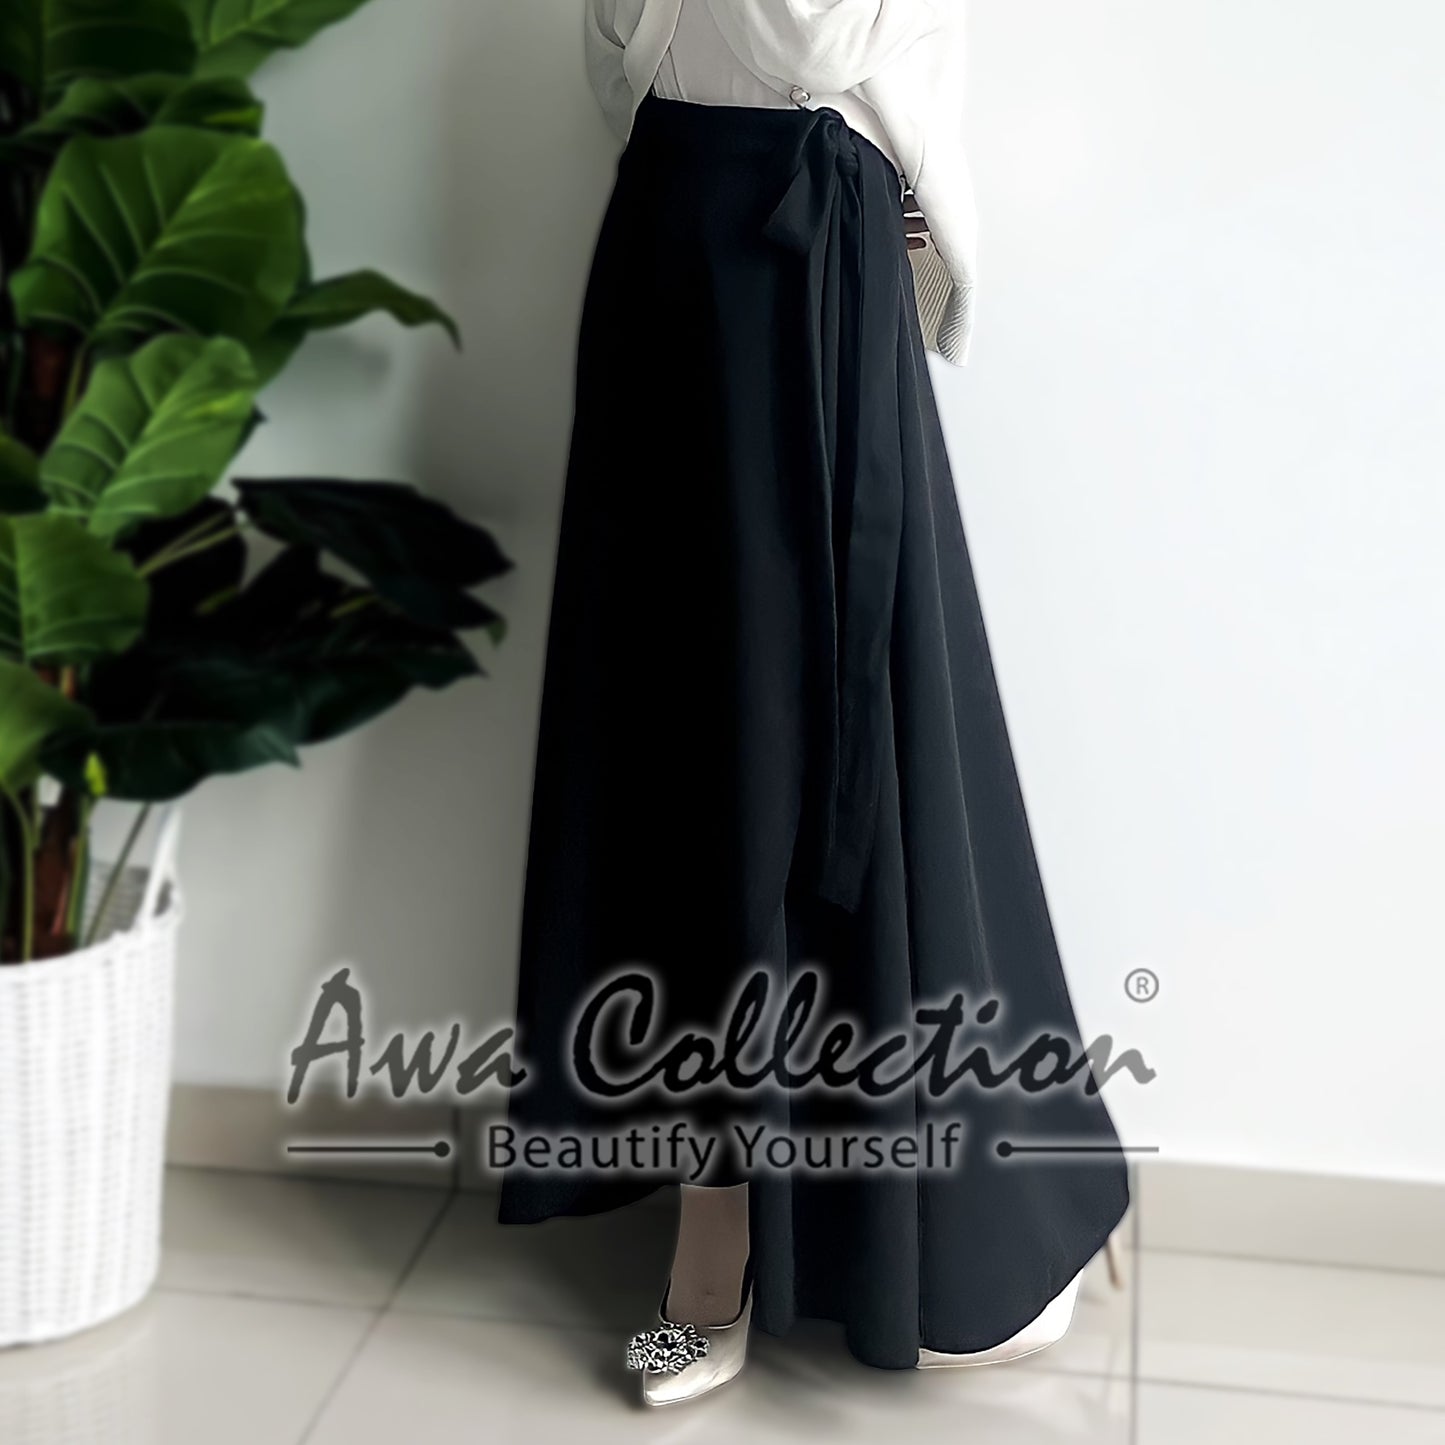 LALEESA Awa Collection BA509529 SKIRT TAMANNI Vintage Asymmetric High Waist Casual Long Skirt Muslimah Skirt Labuh